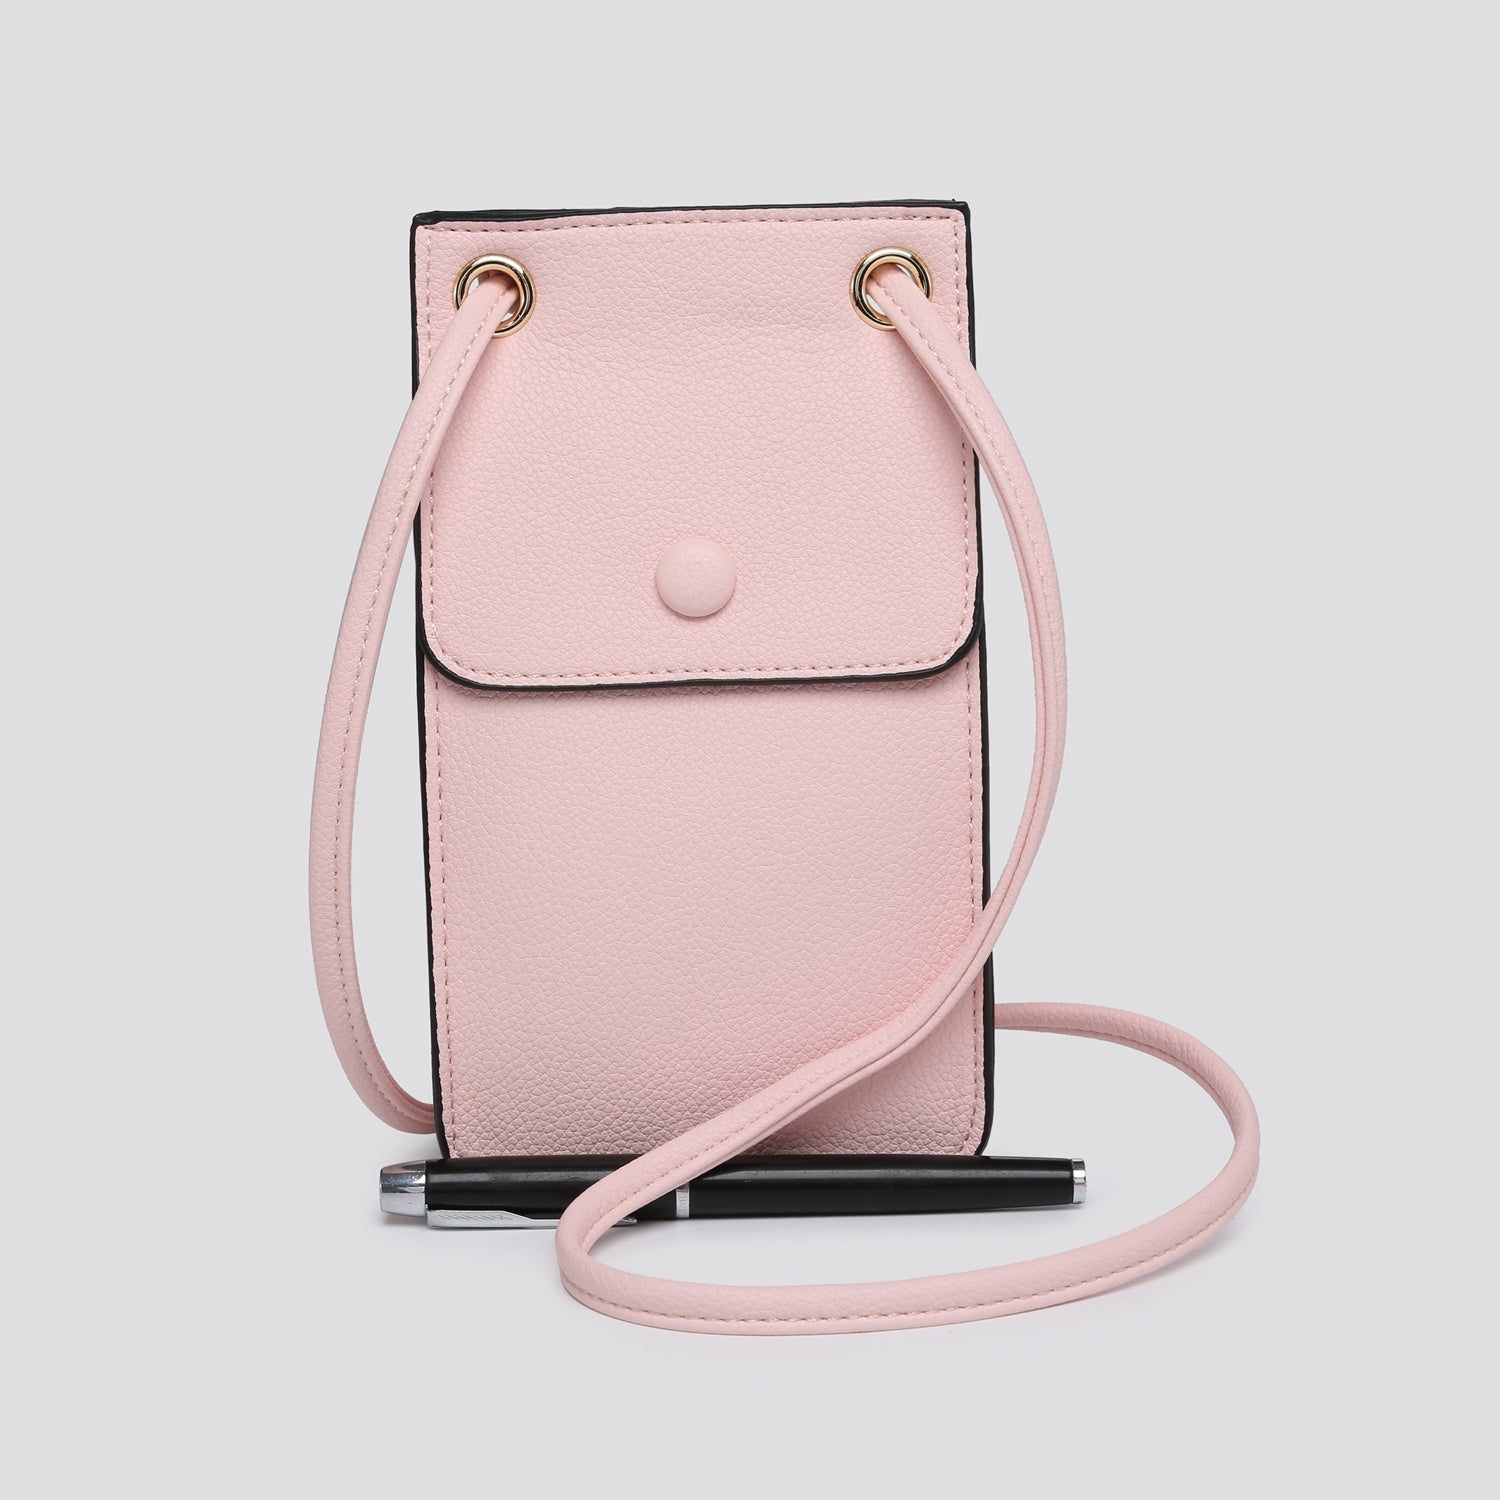 Crossbody Phone Bags for Women Small Shoulder Bag Handbags Multifunctional Cellphone Bag